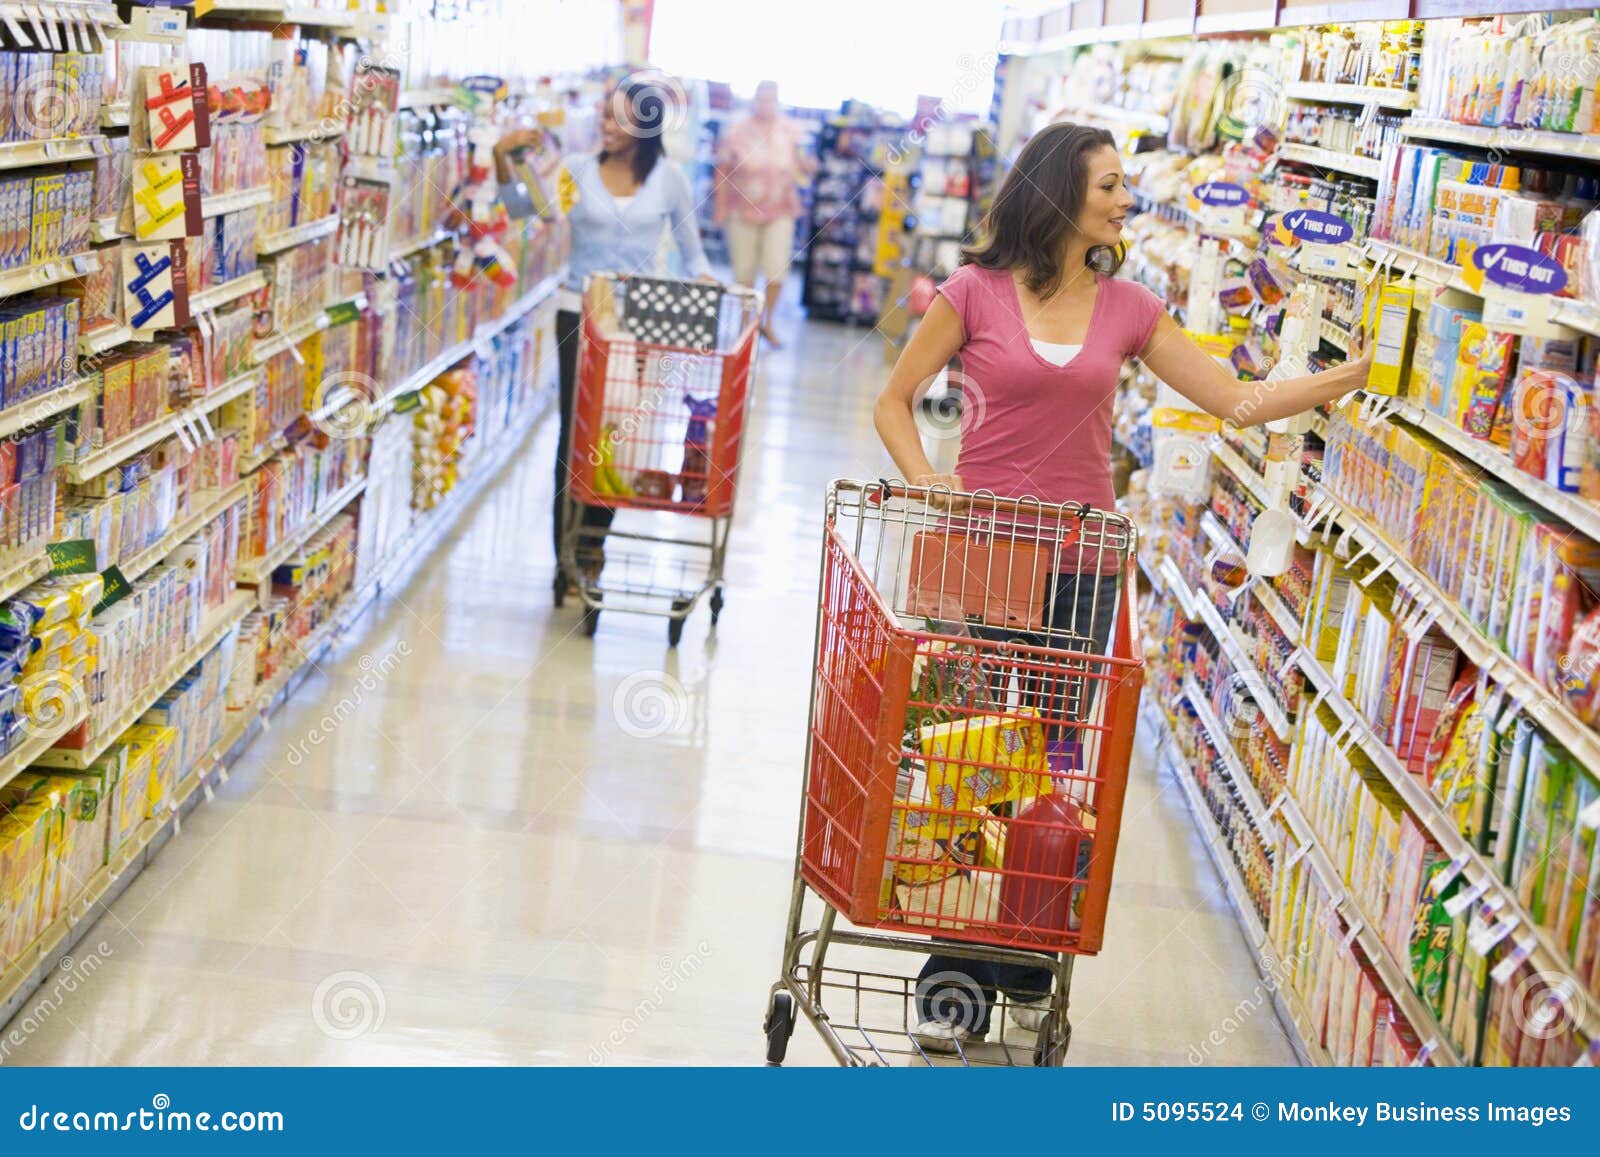 two women shopping in supermarket